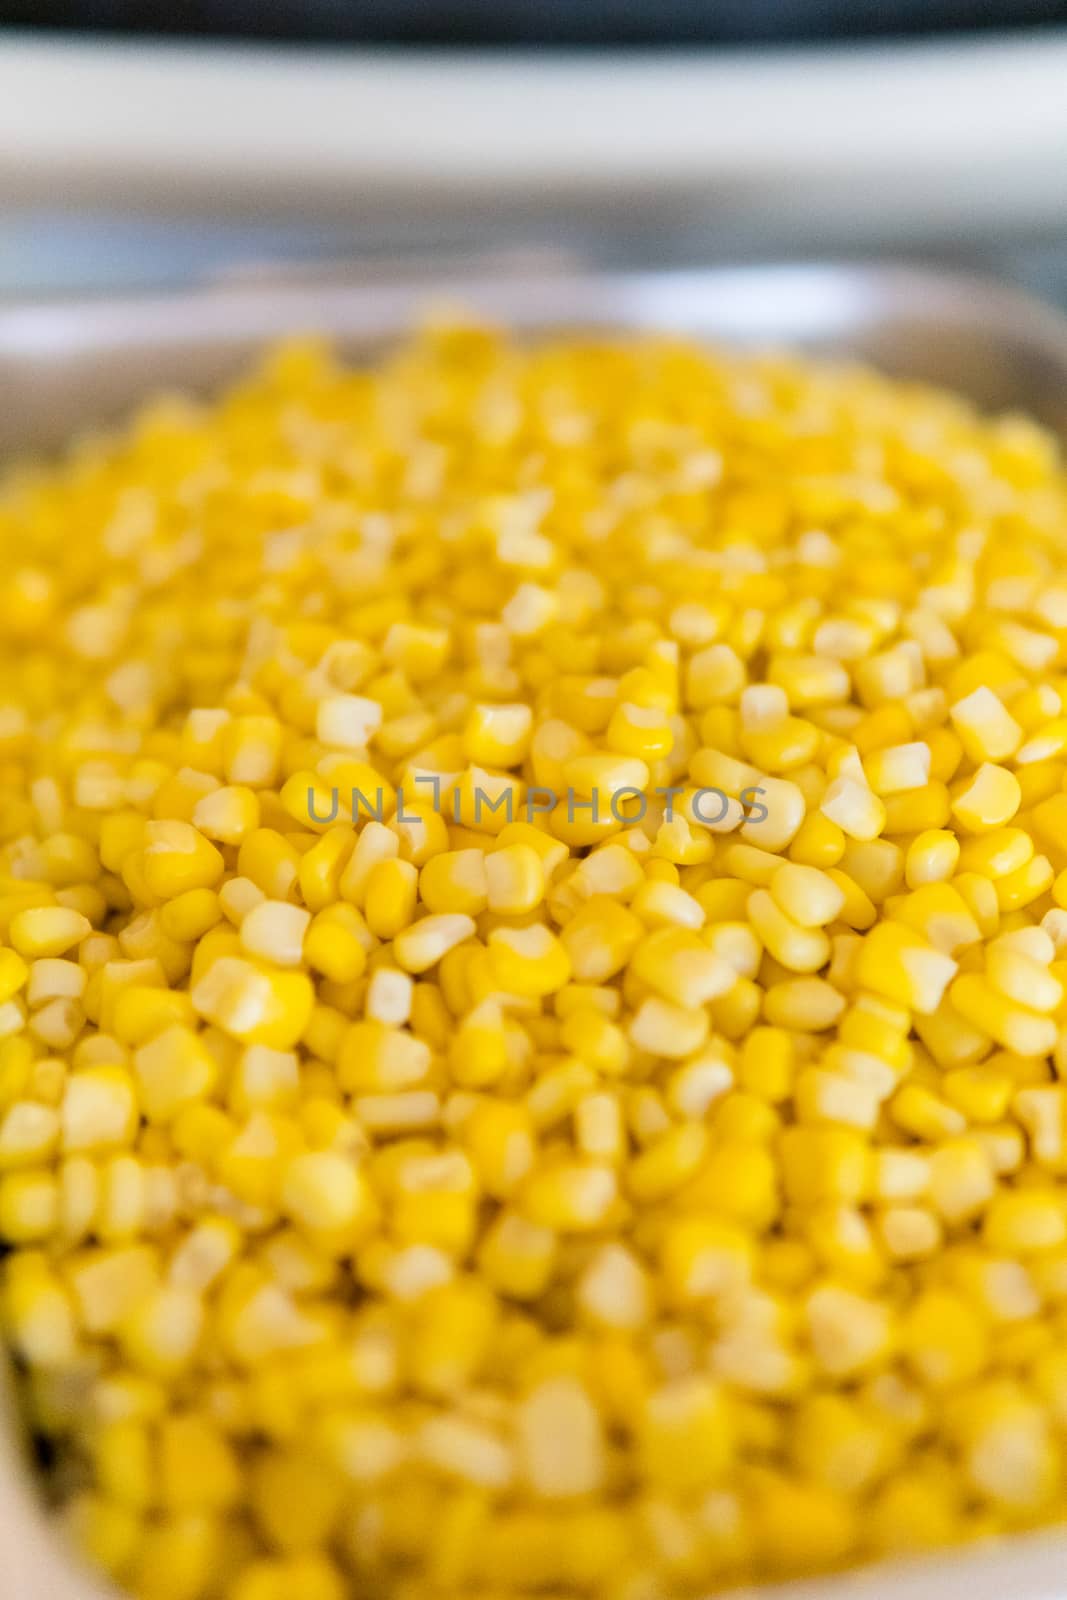 Boiled Corn grain in a tray